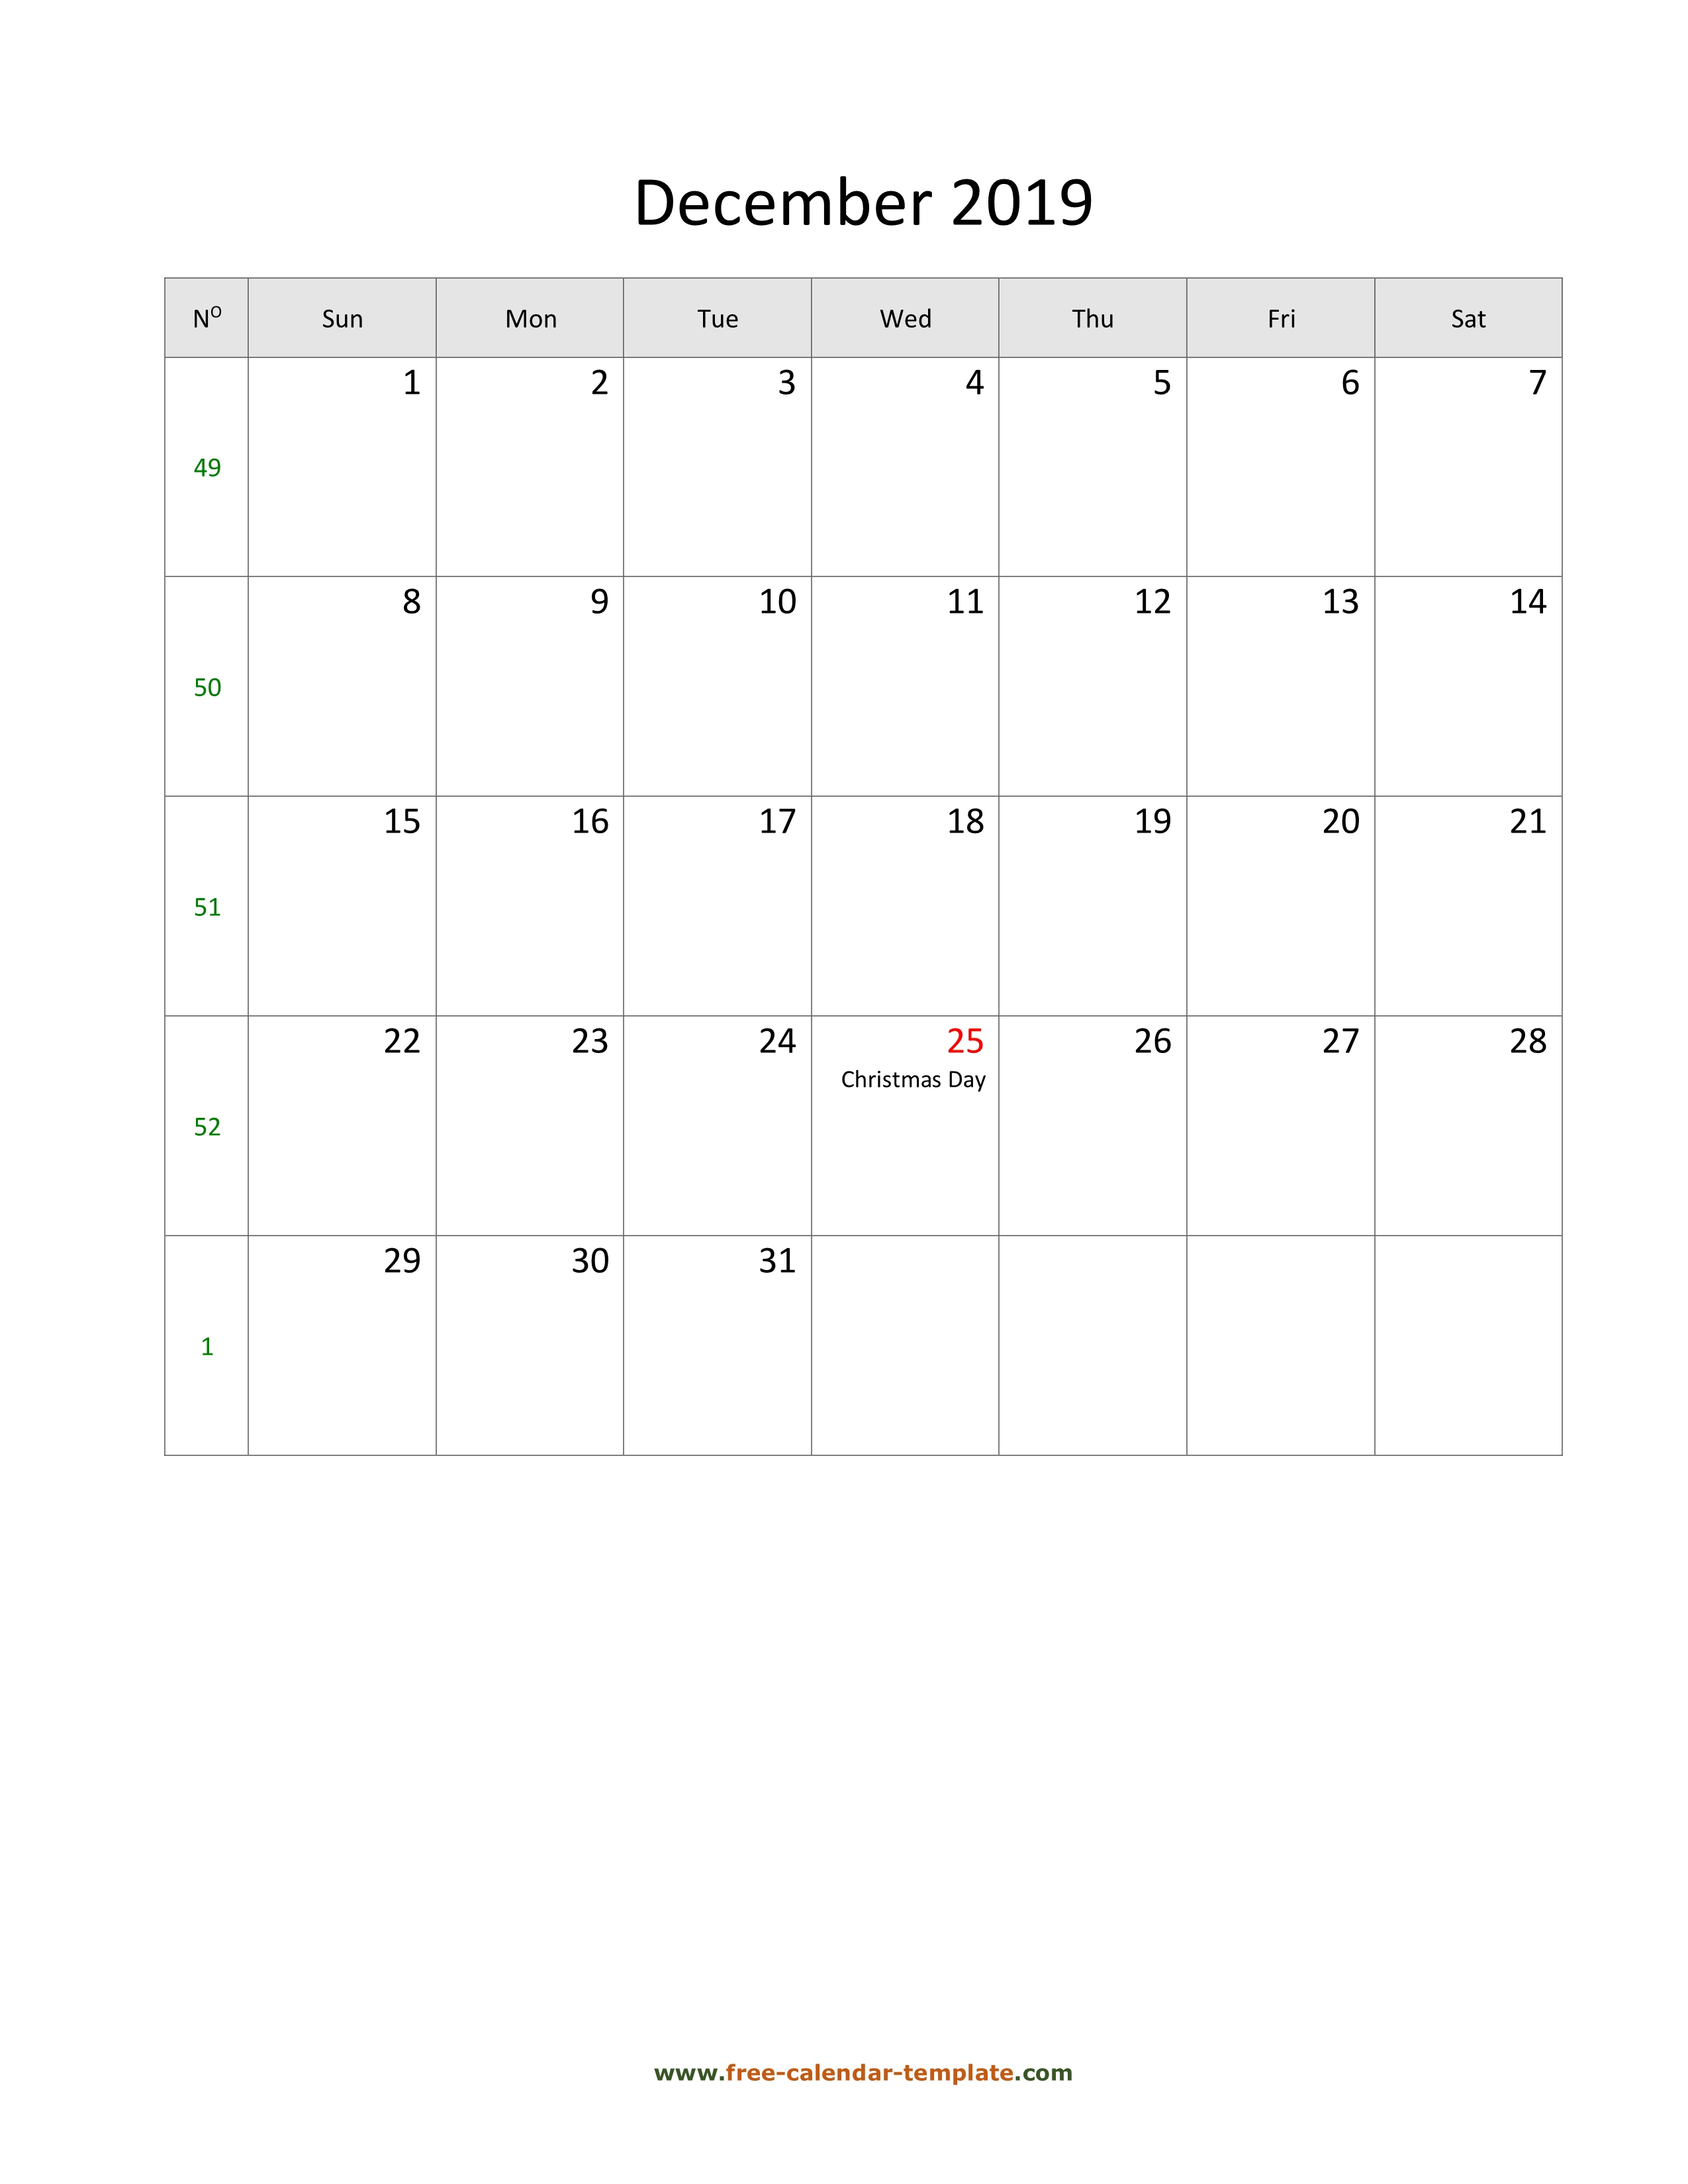 December 2019 Free Calendar Tempplate | Freecalendar throughout Calendar With Blank Squares